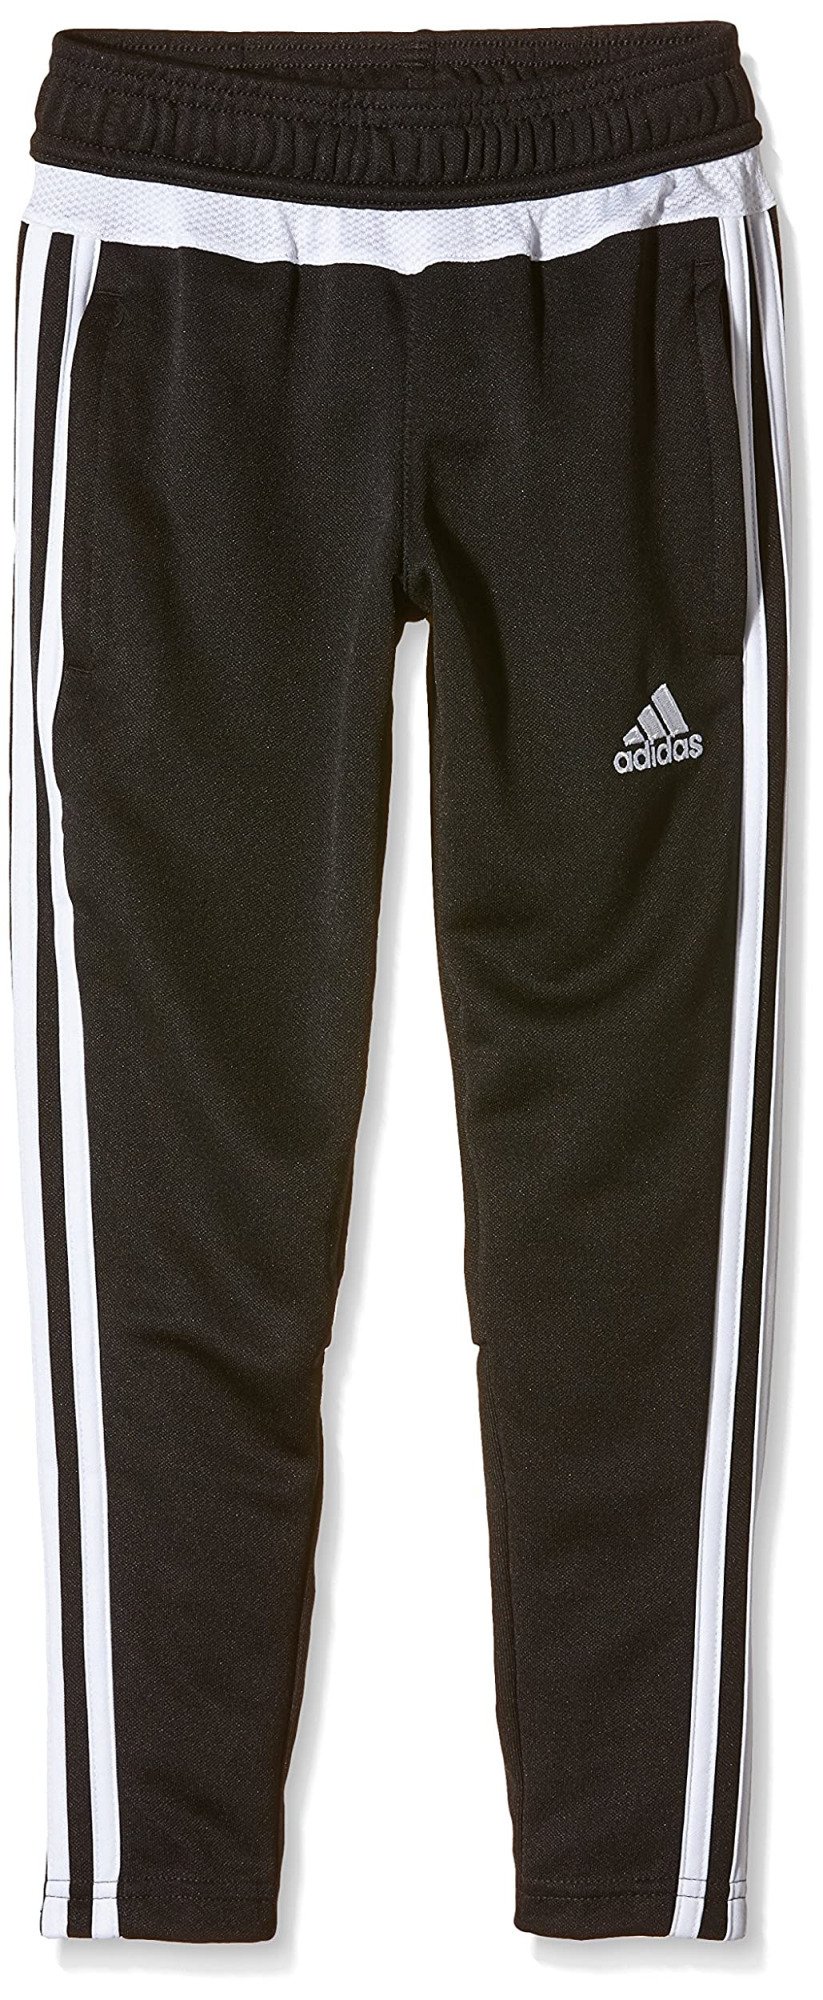 Boys Adidas Tiro 21 Track Pants Youth Sizes  BlackDark Grey  Walmartcom